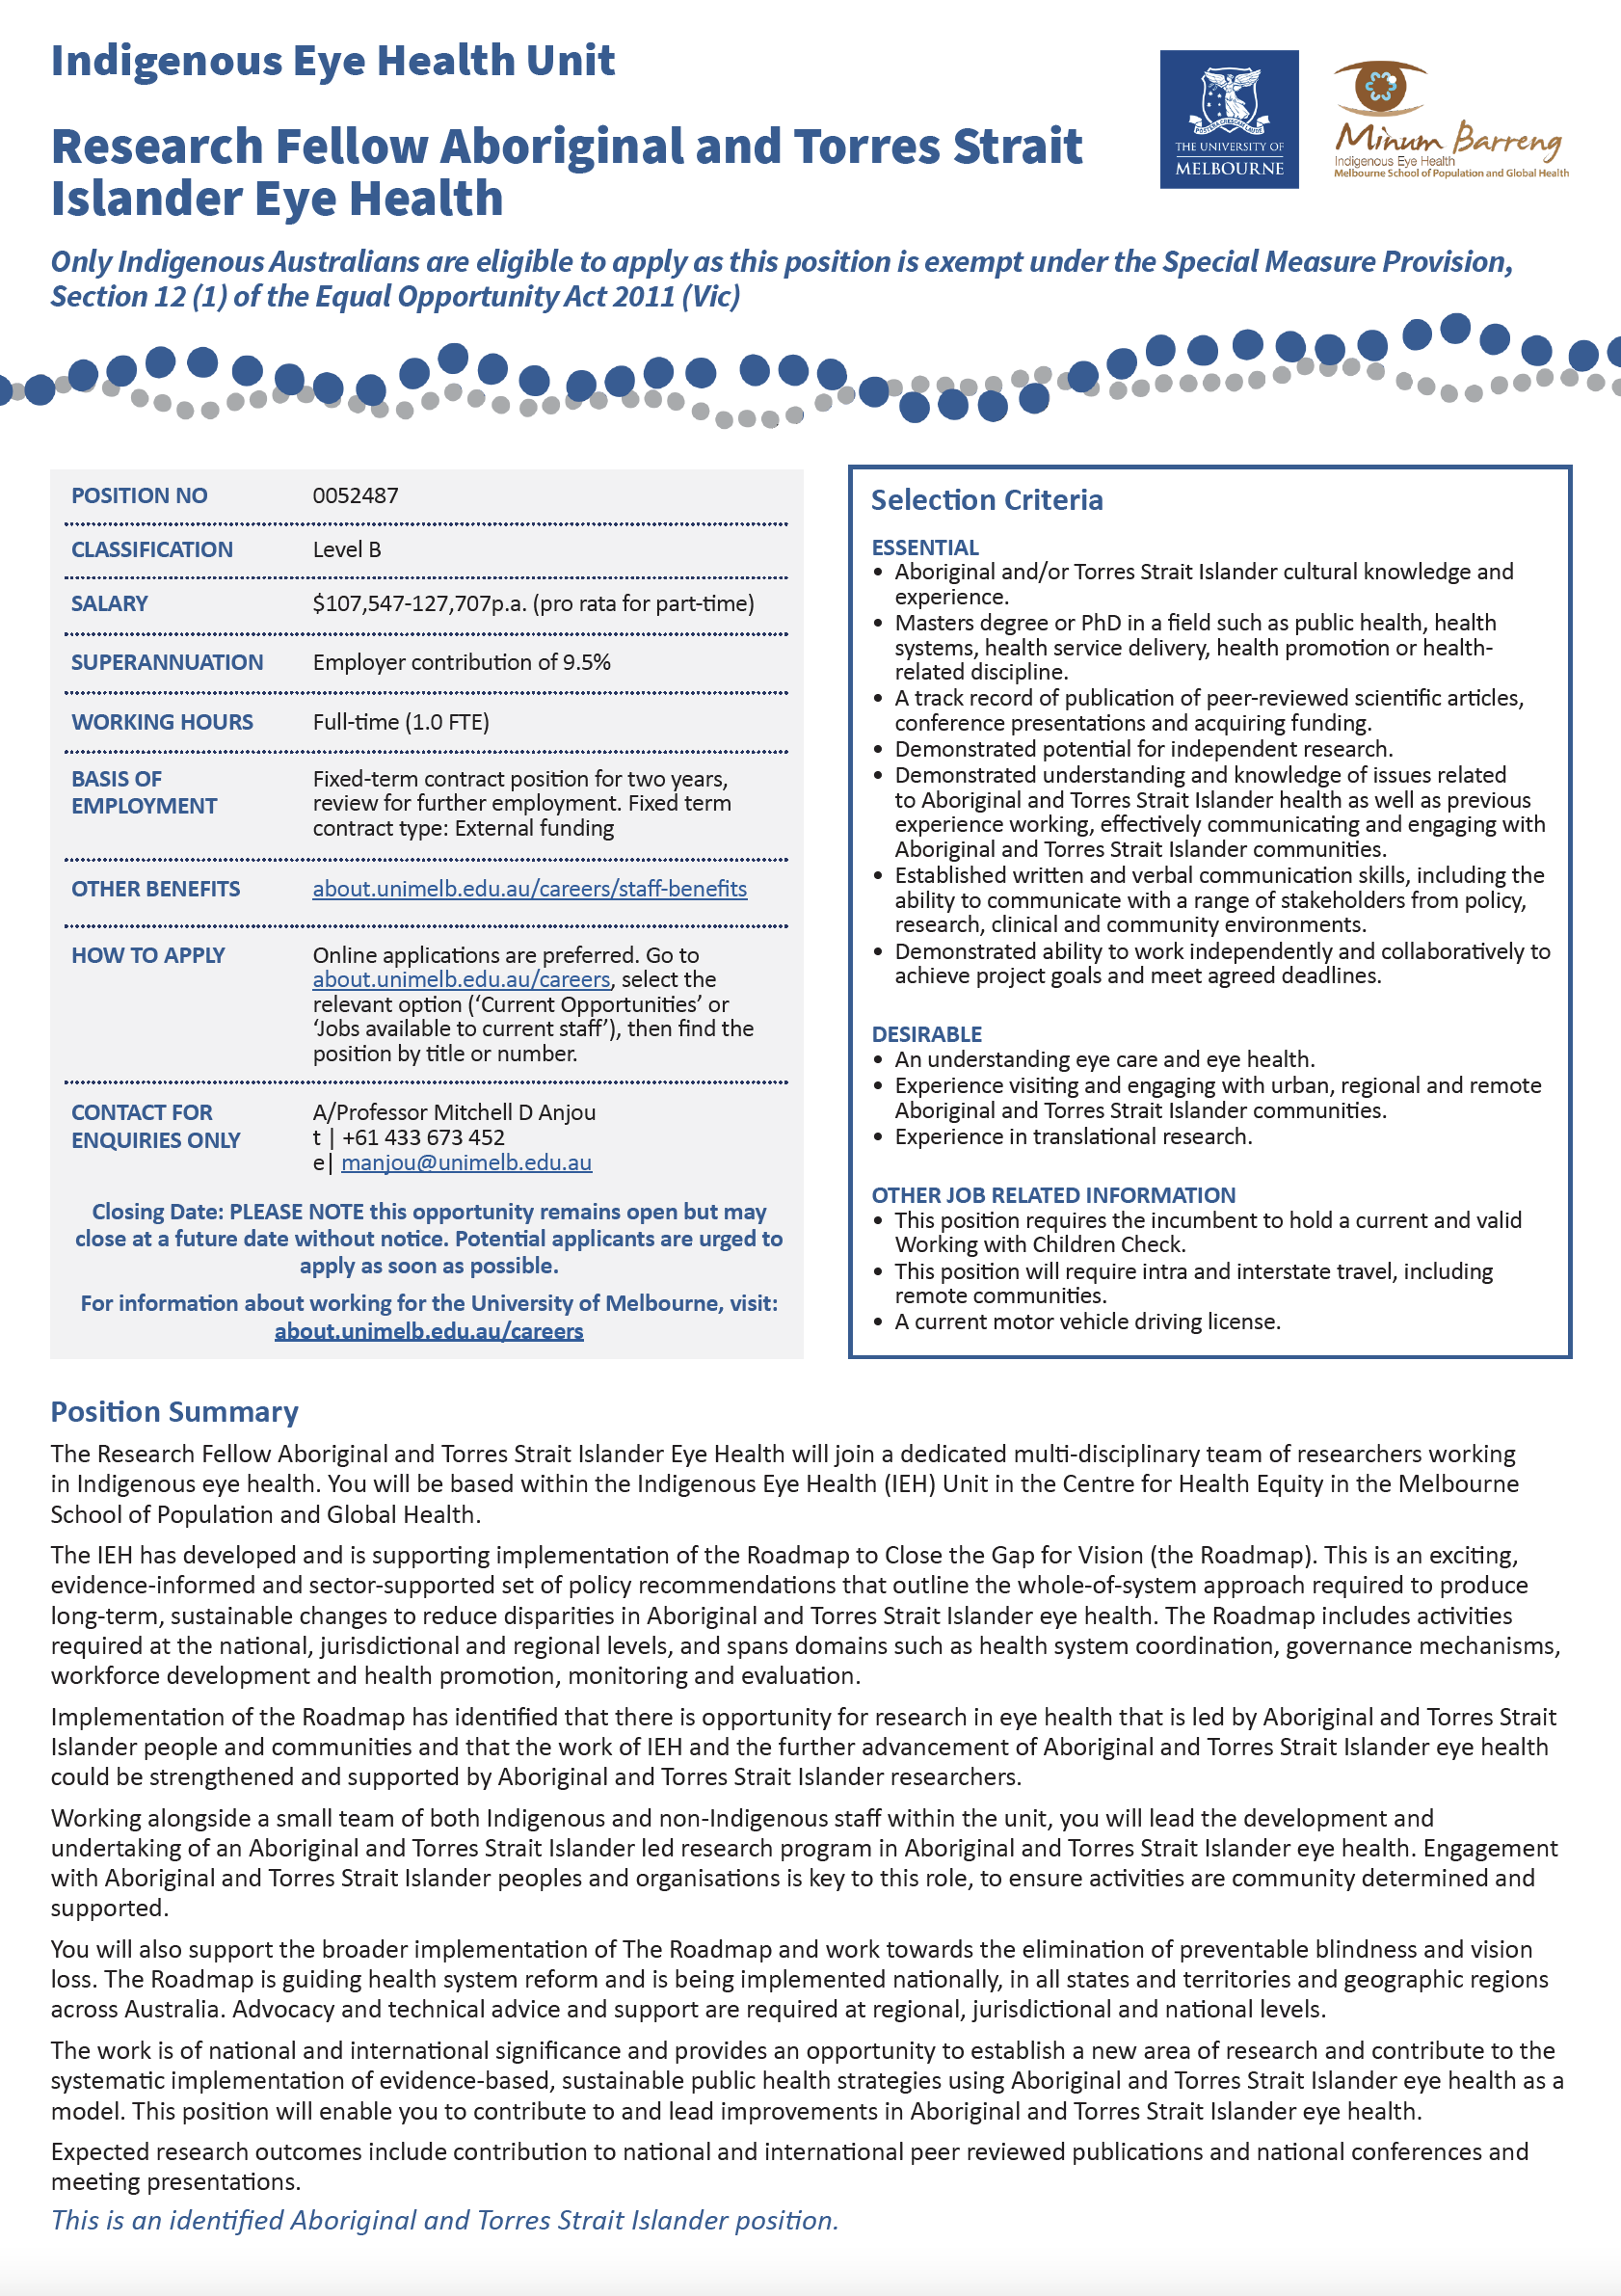 2021 research fellow job position description